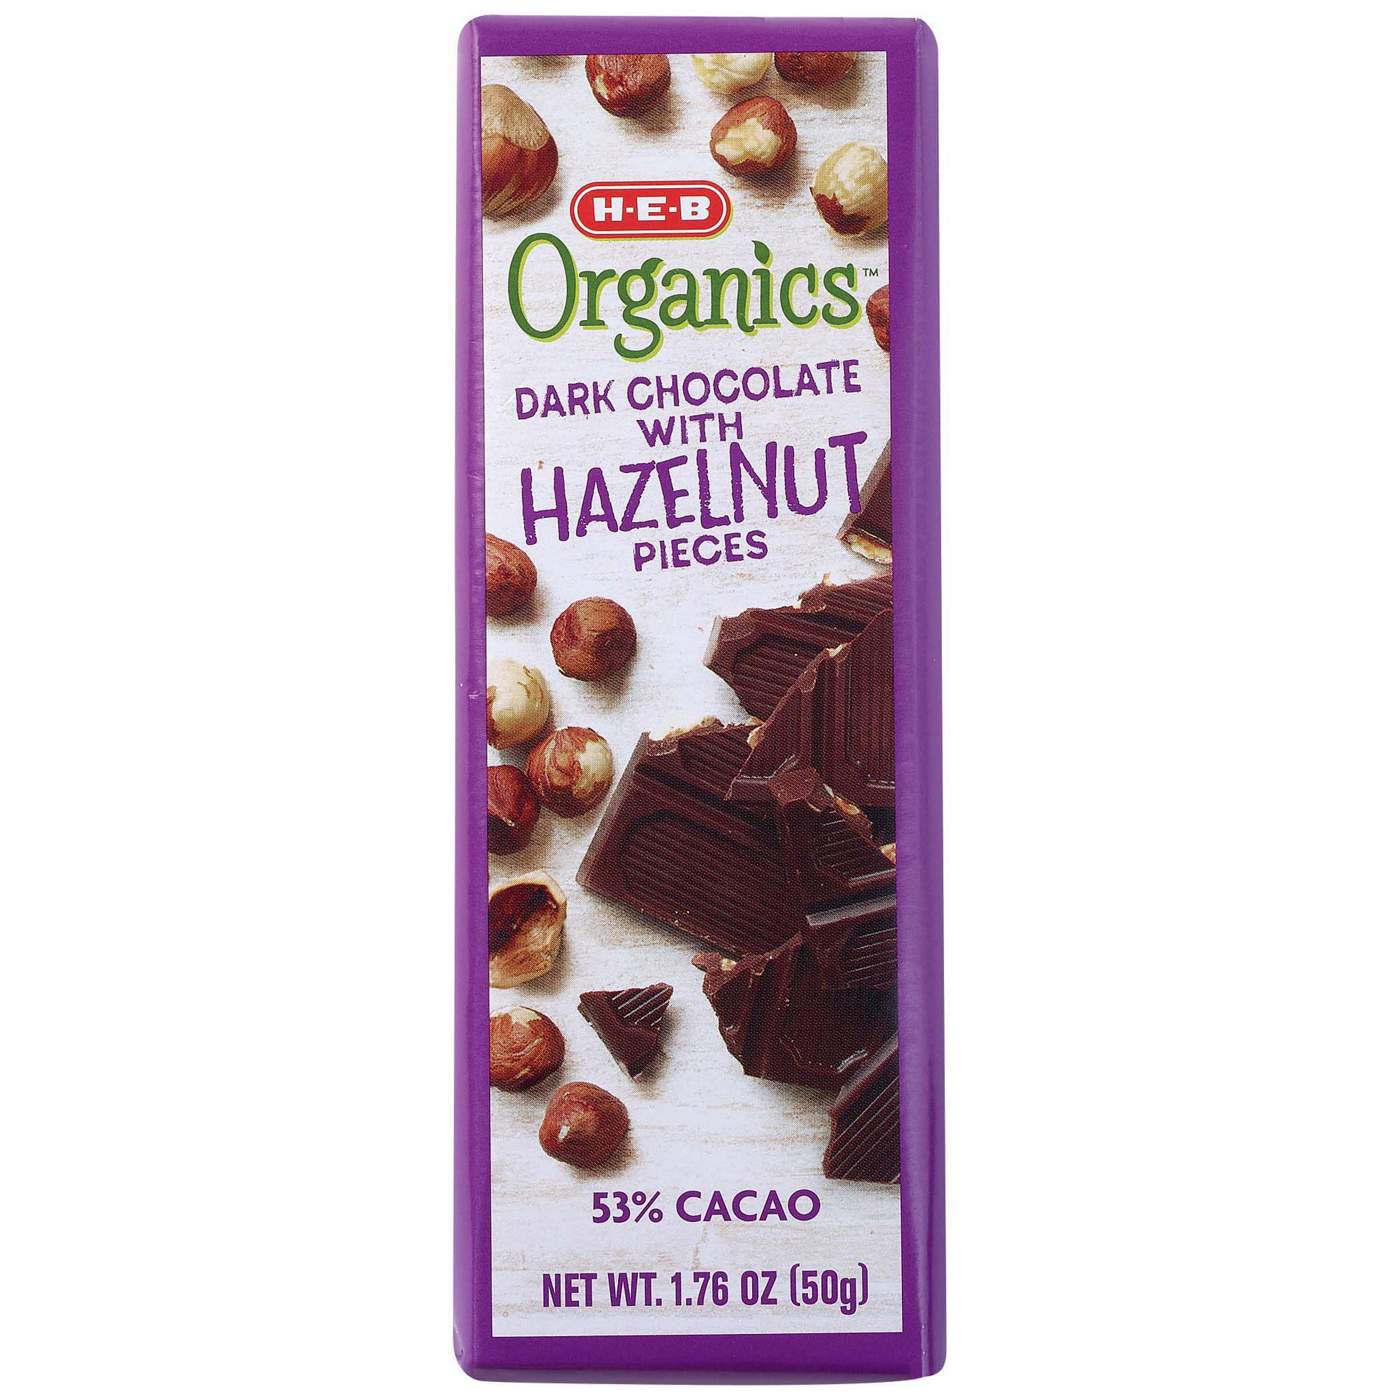 H-E-B Organics 53% Cacao Dark Chocolate Bar - Hazelnuts; image 1 of 2